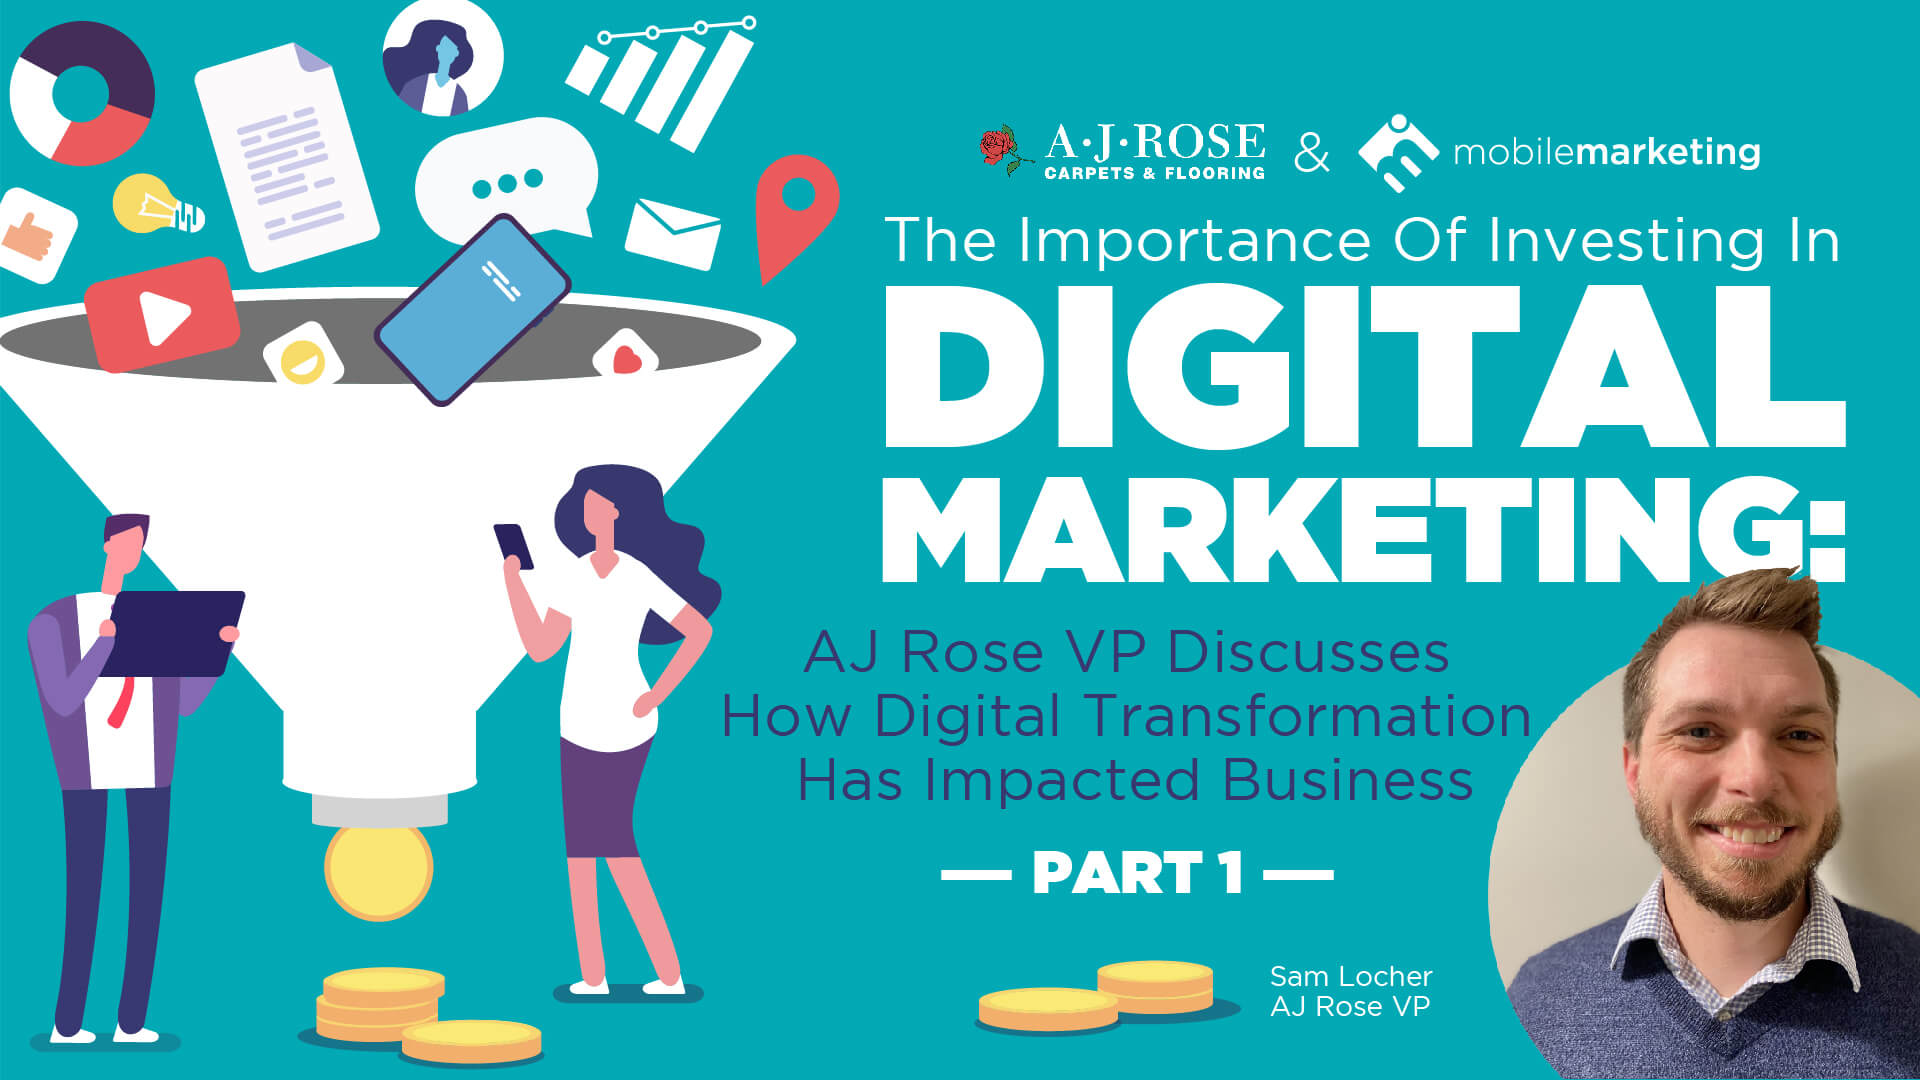 AJ Rose Digital Marketing Blog | Mobile Marketing